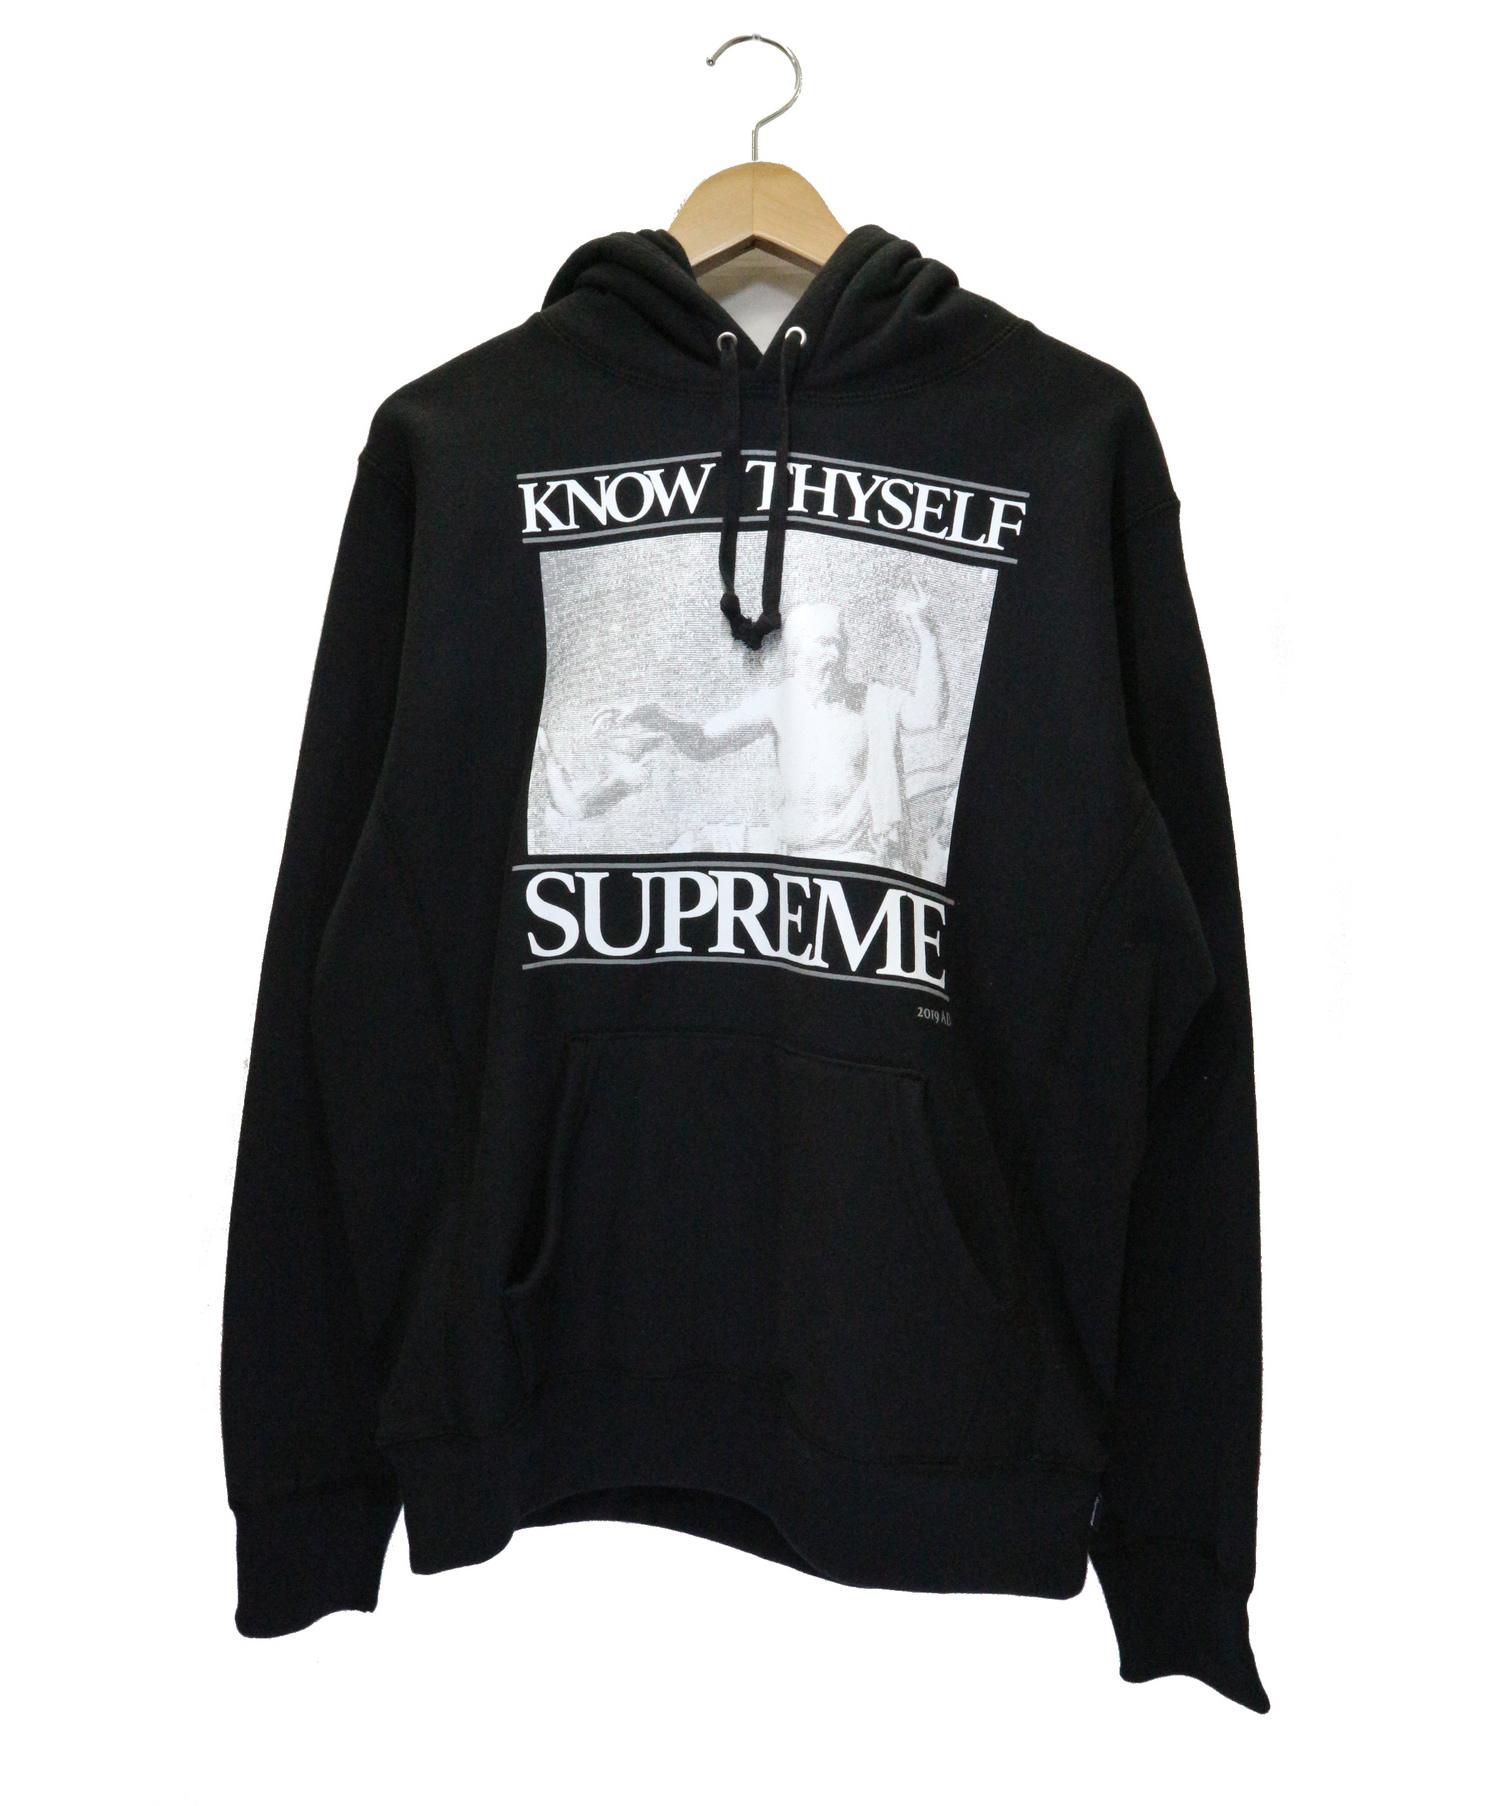 know thyself supreme hoodie